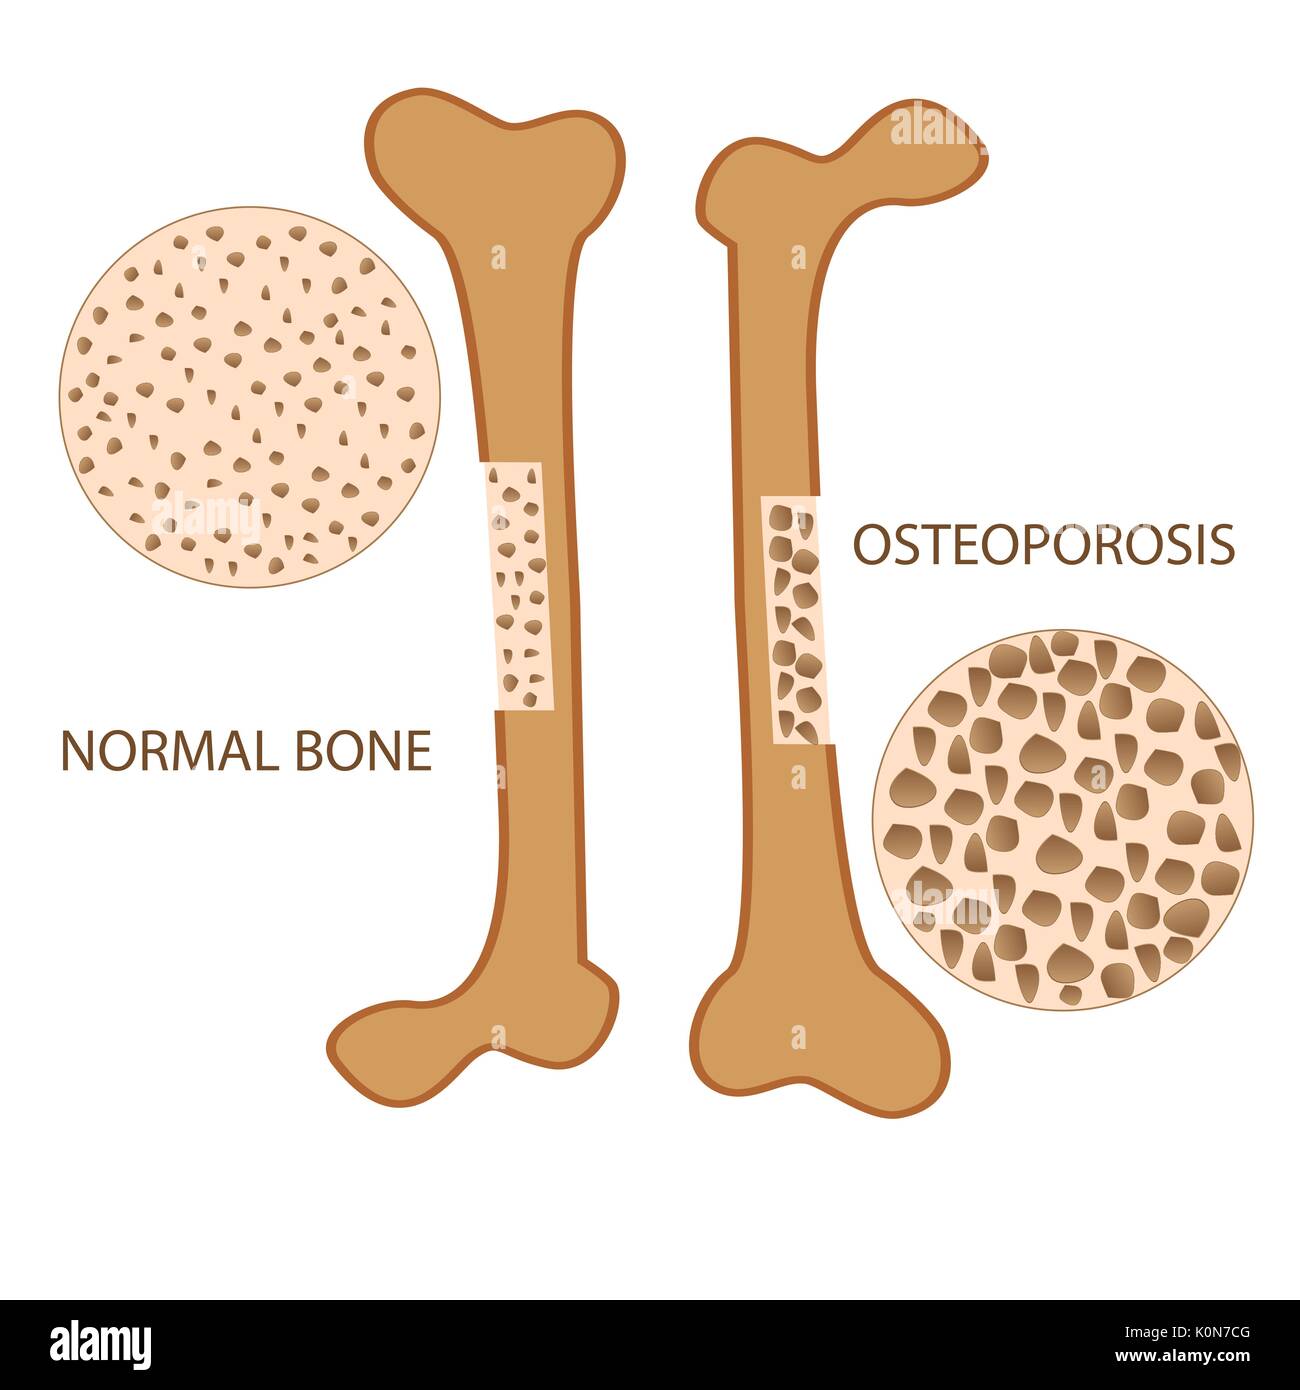 osteoporosis bone anatomy versus normal health bone. vector format illustration Stock Vector